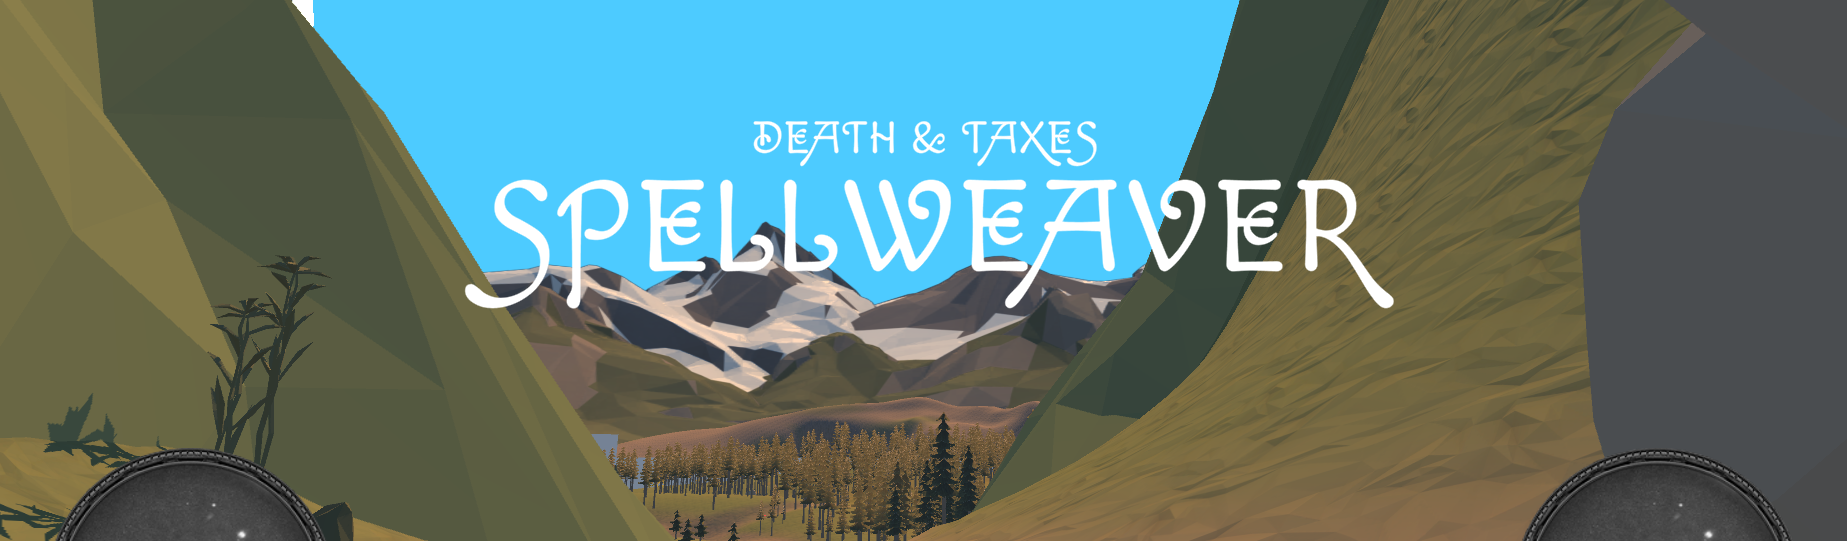 Death & Taxes: Spellweaver